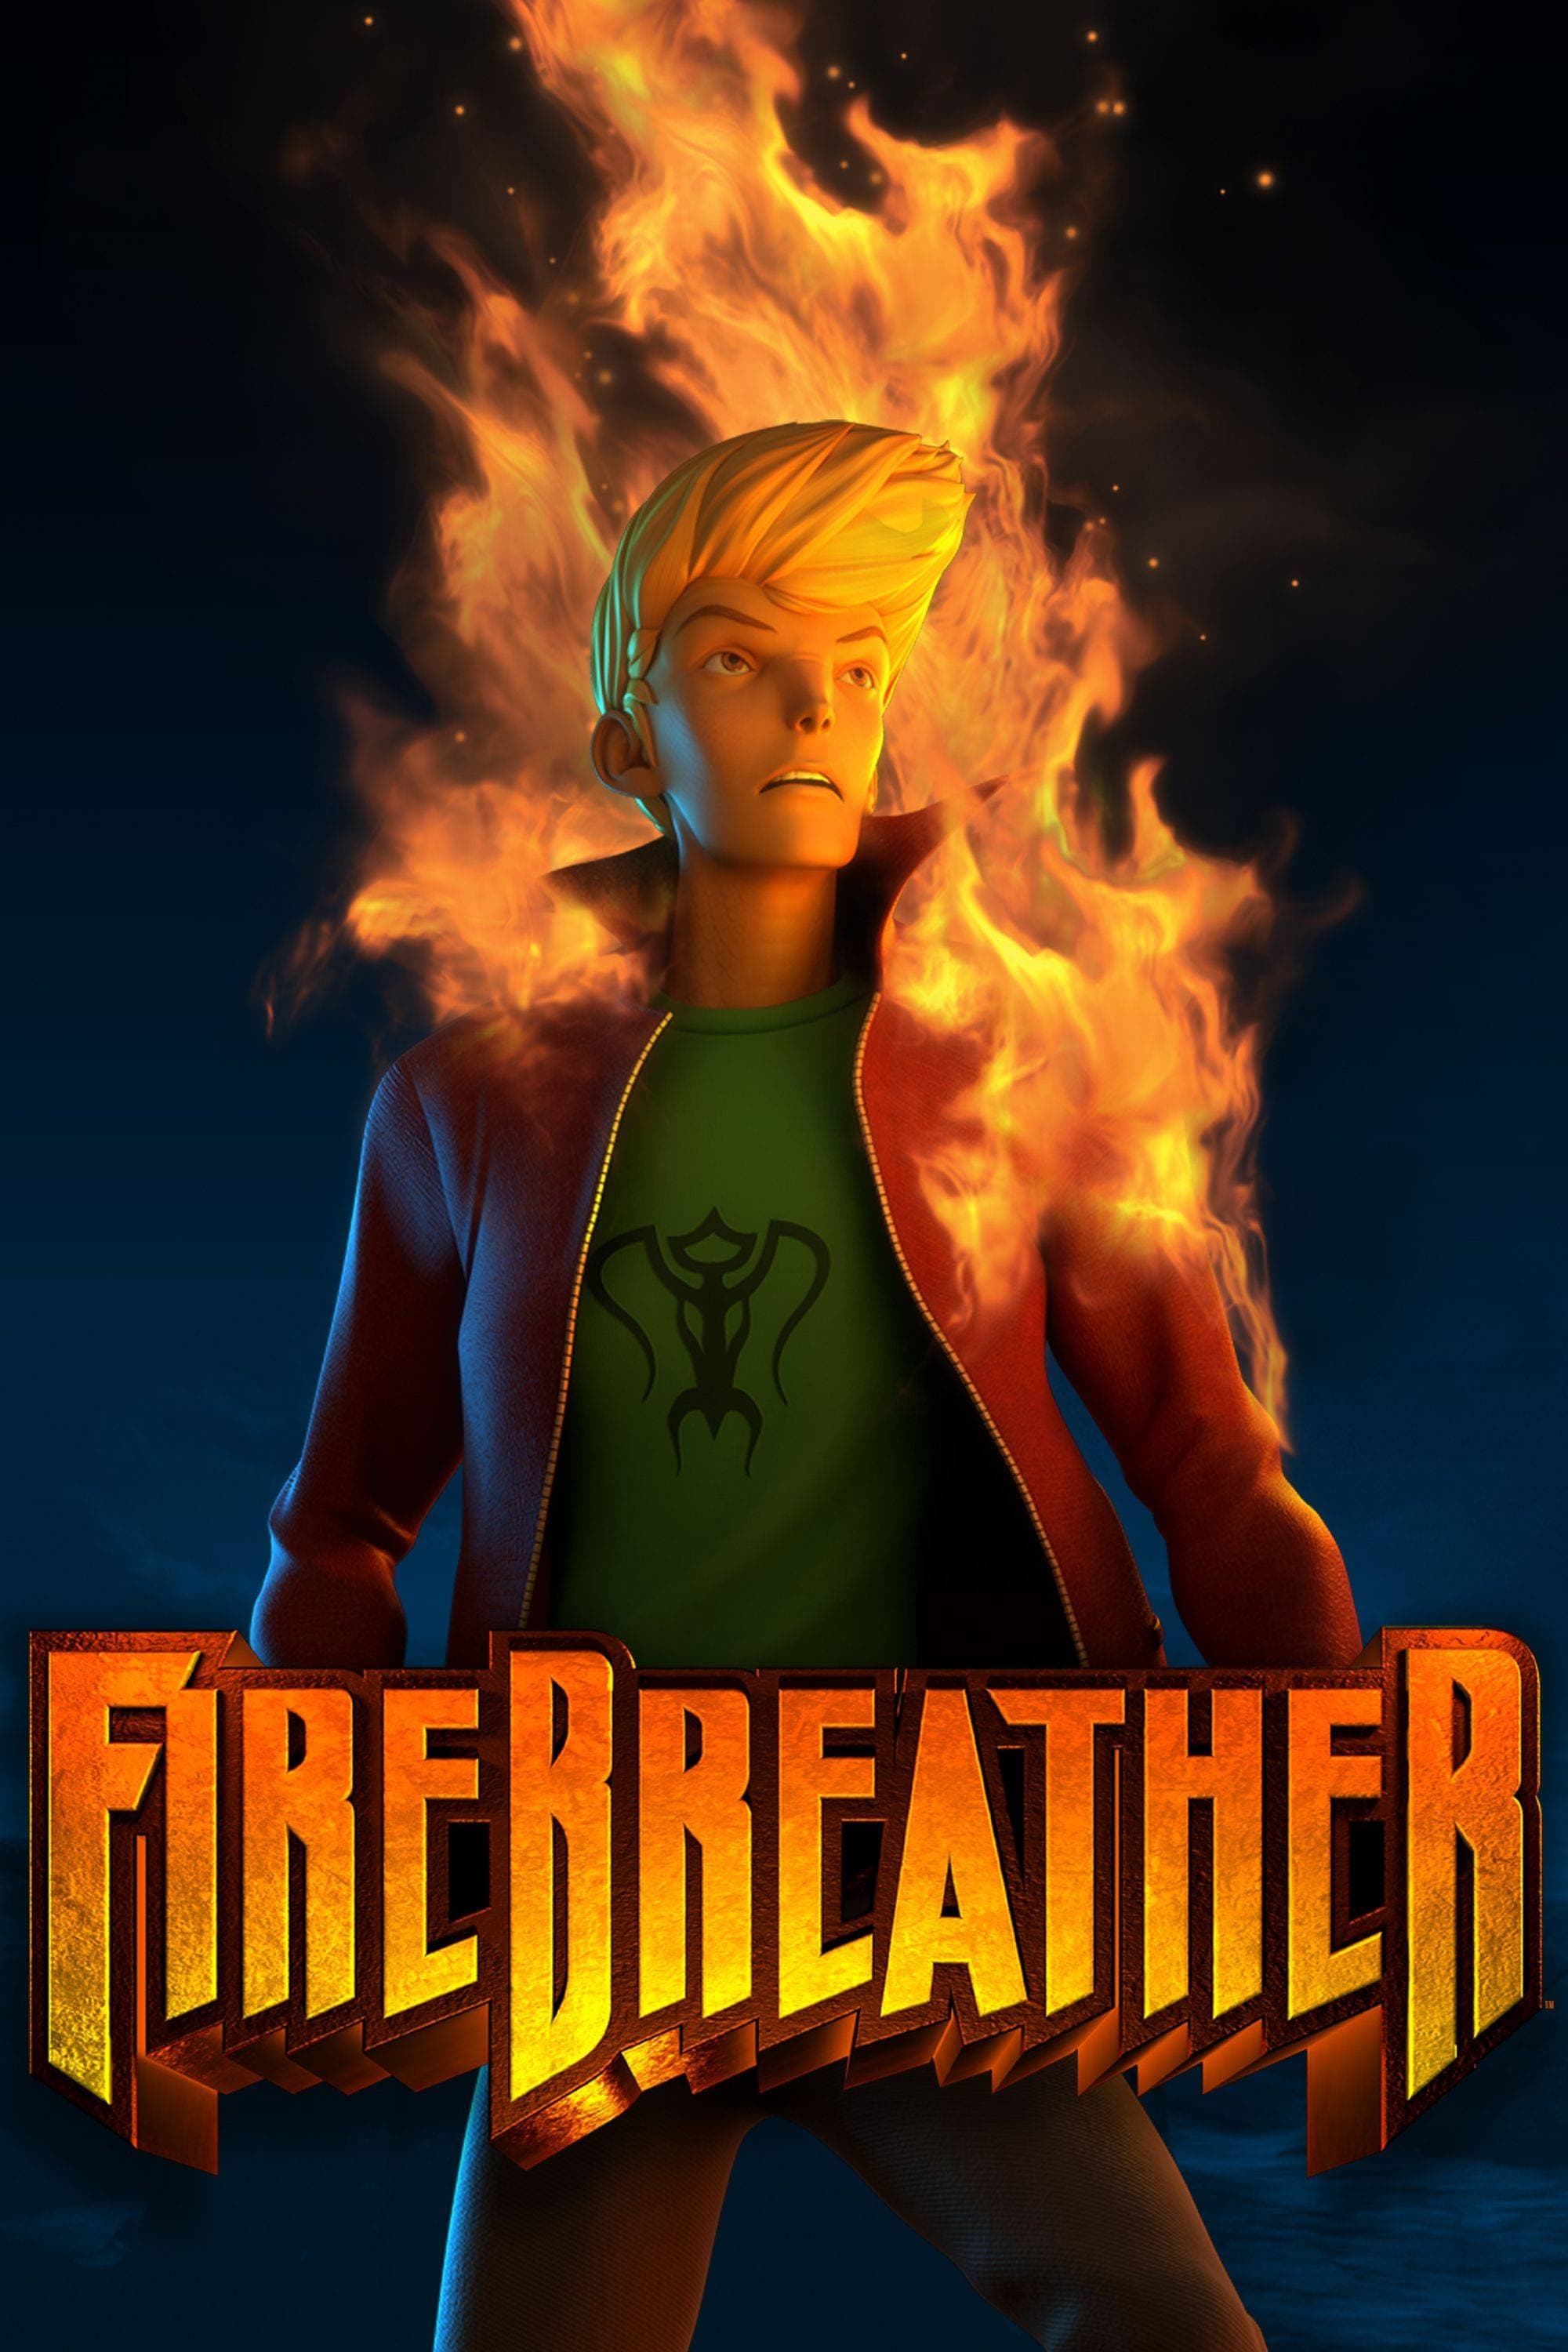 Firebreather: I due mondi film